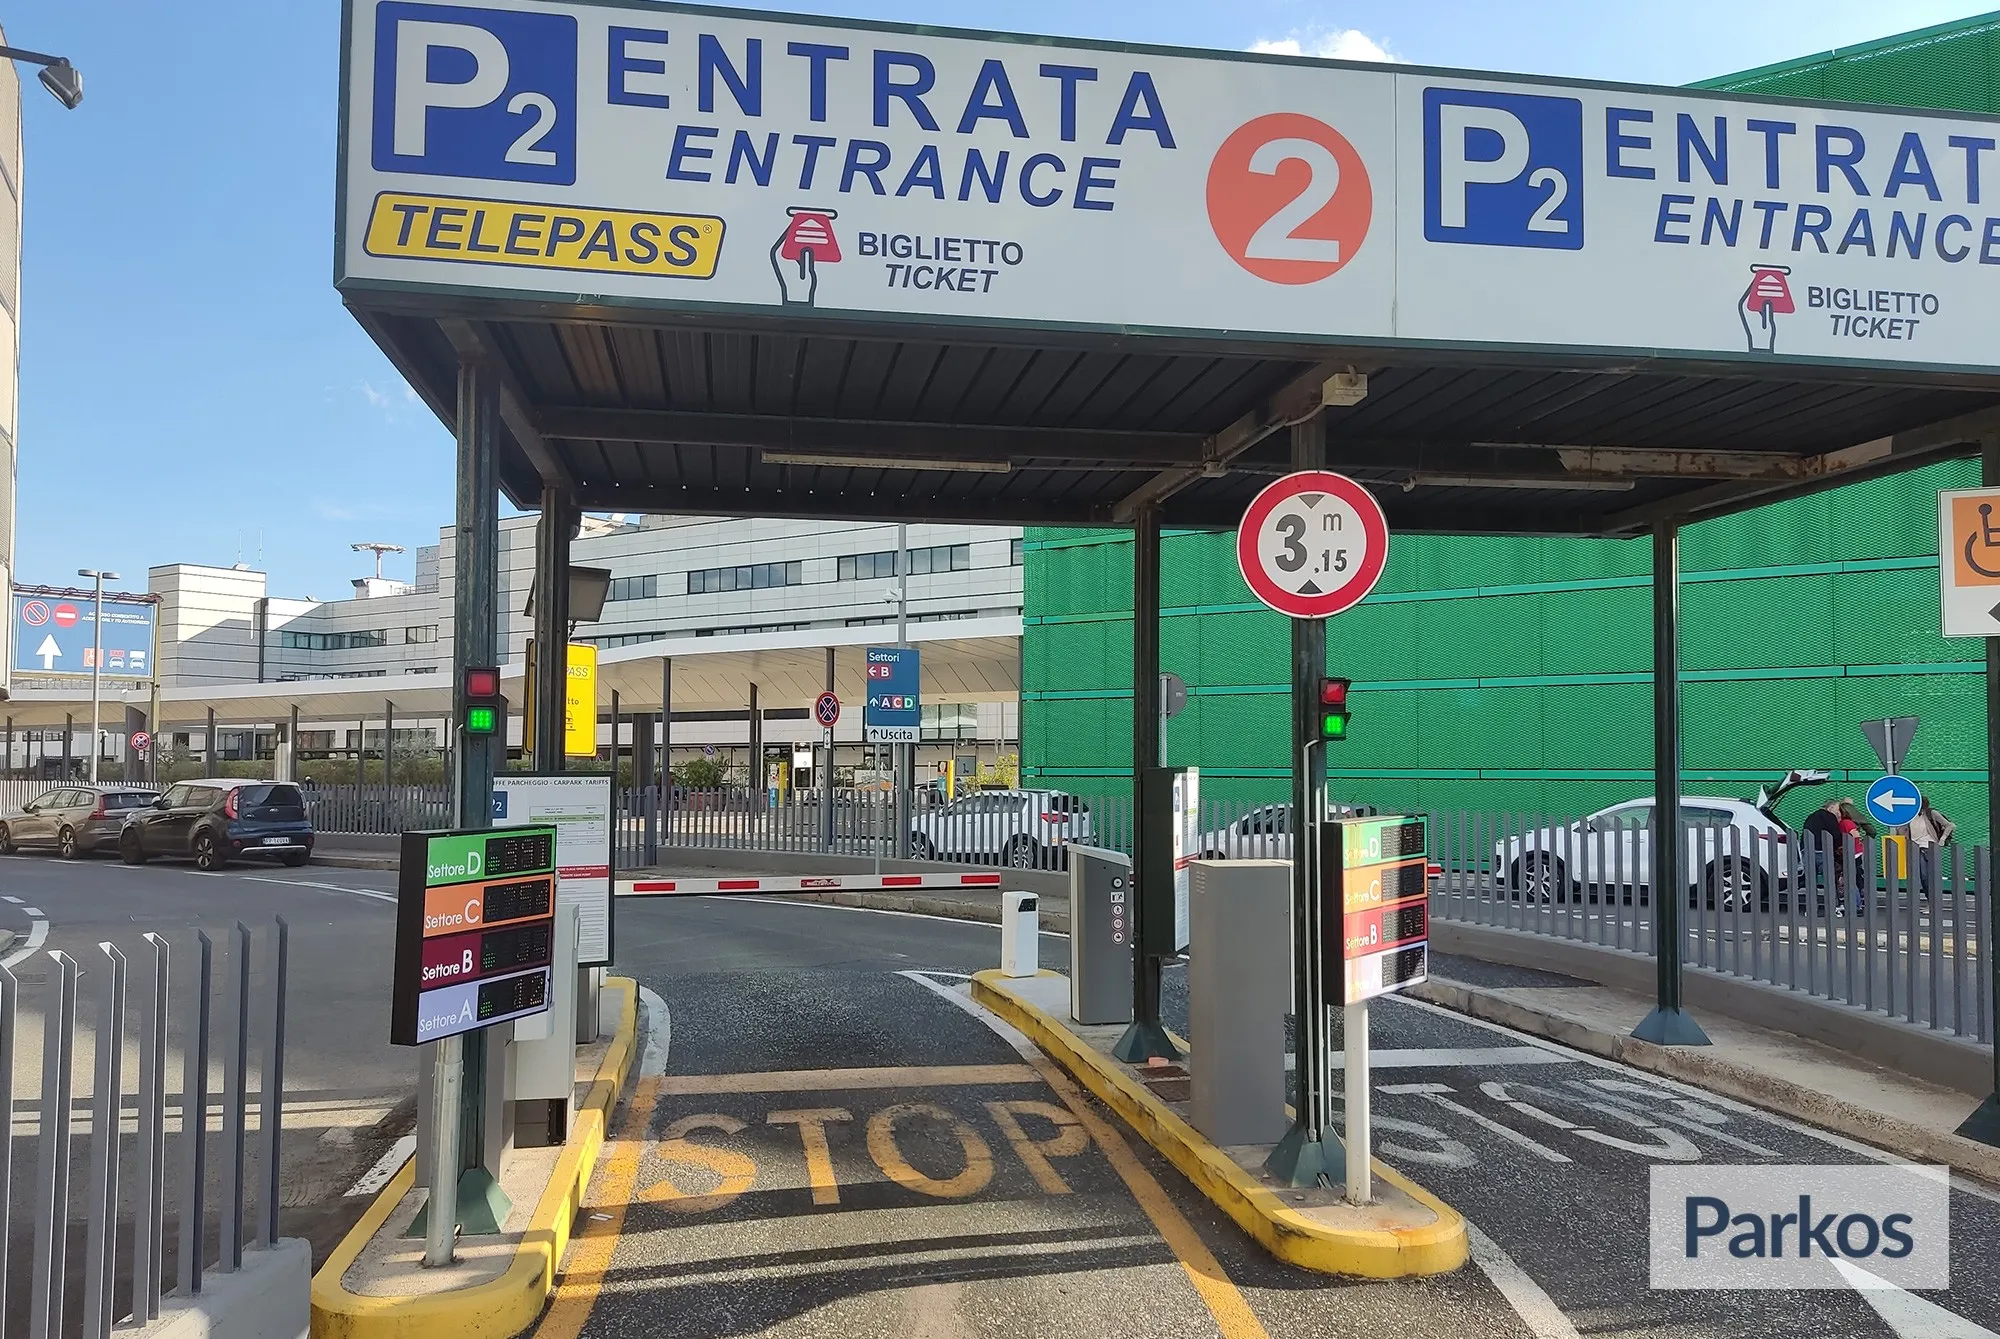 Toscana Aeroporti P2 Multipiano (Paga online) - Parking Aéroport Pise - picture 1